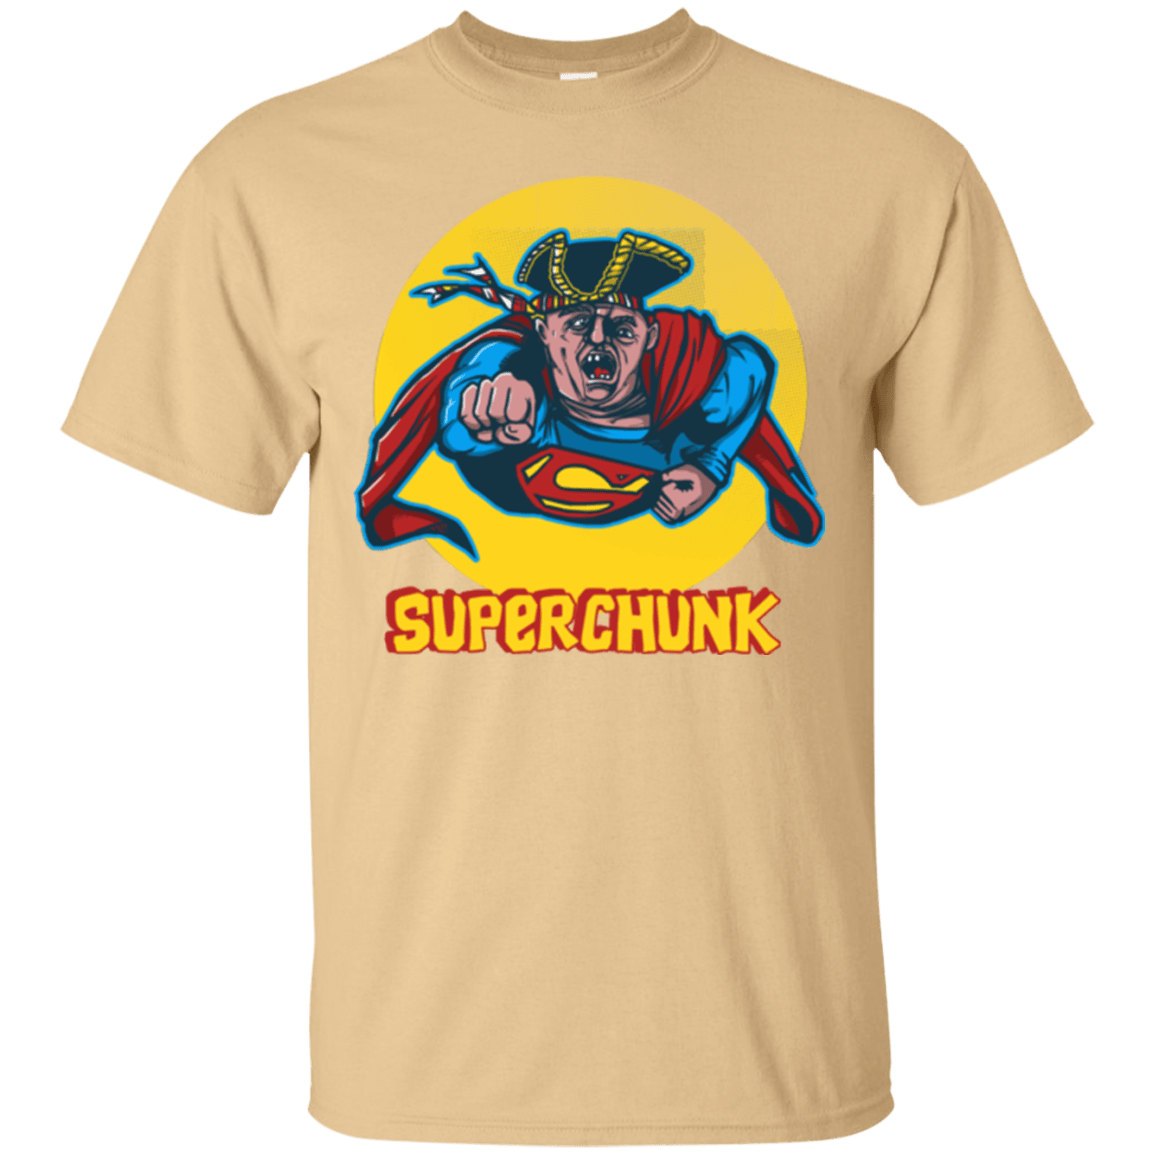 Super Chunk T-Shirt Pop Up